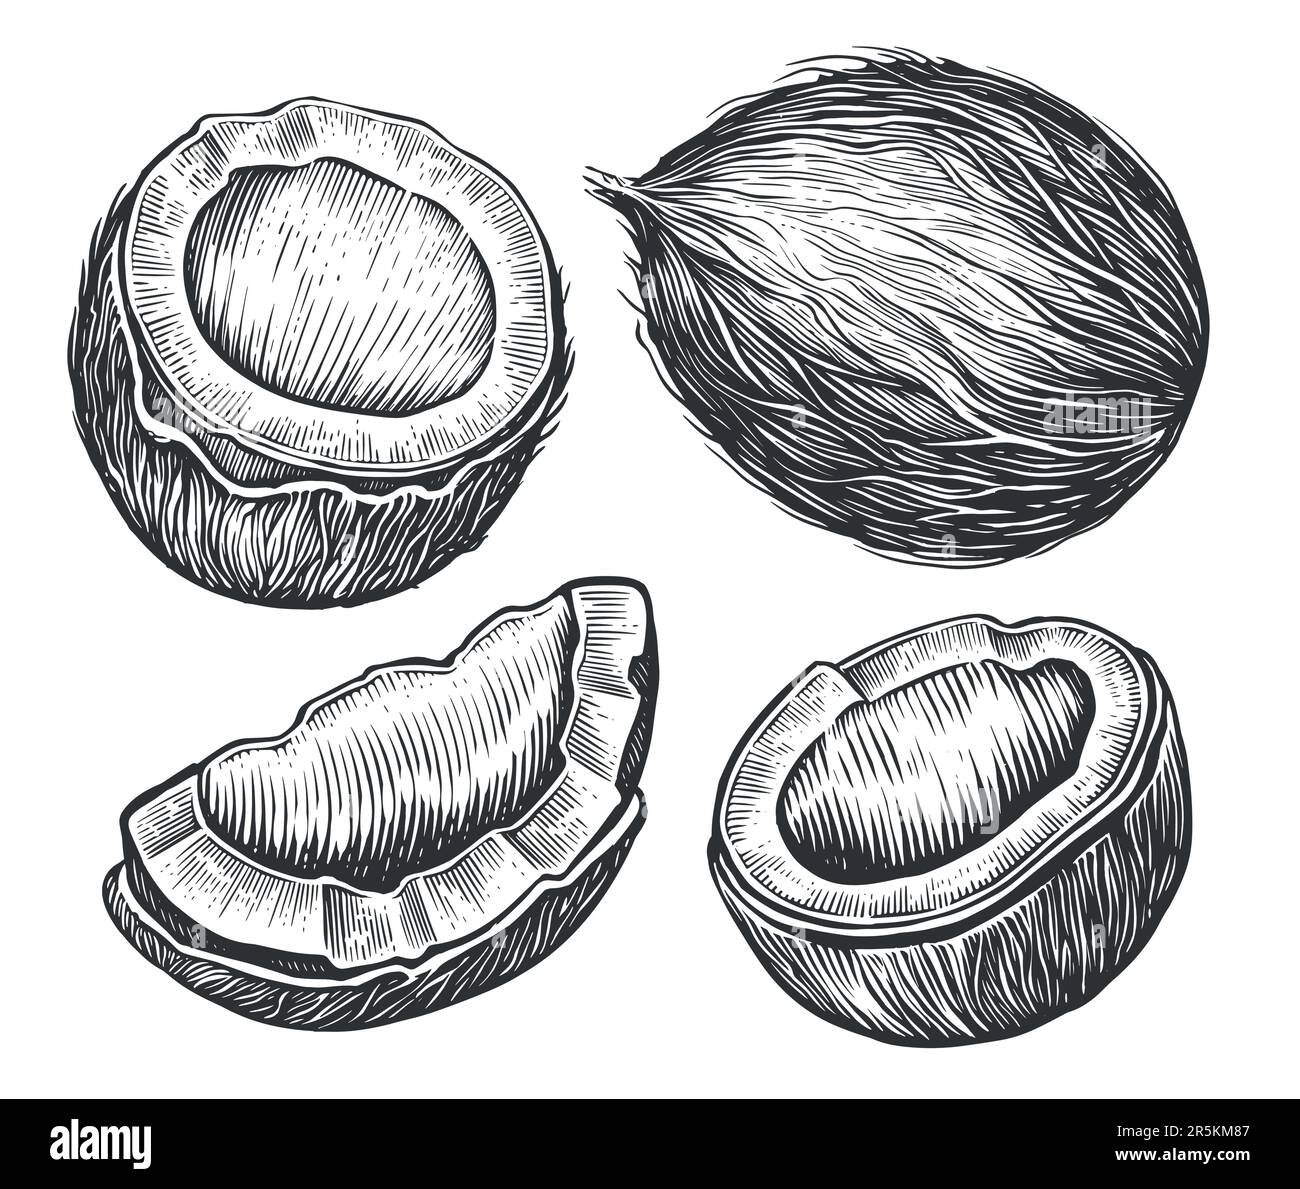 Kokosnussmutter-Set. Handgezeichnete Skizze Vektor tropische Lebensmittel Vektor Illustration. Vintage-Style Stock Vektor